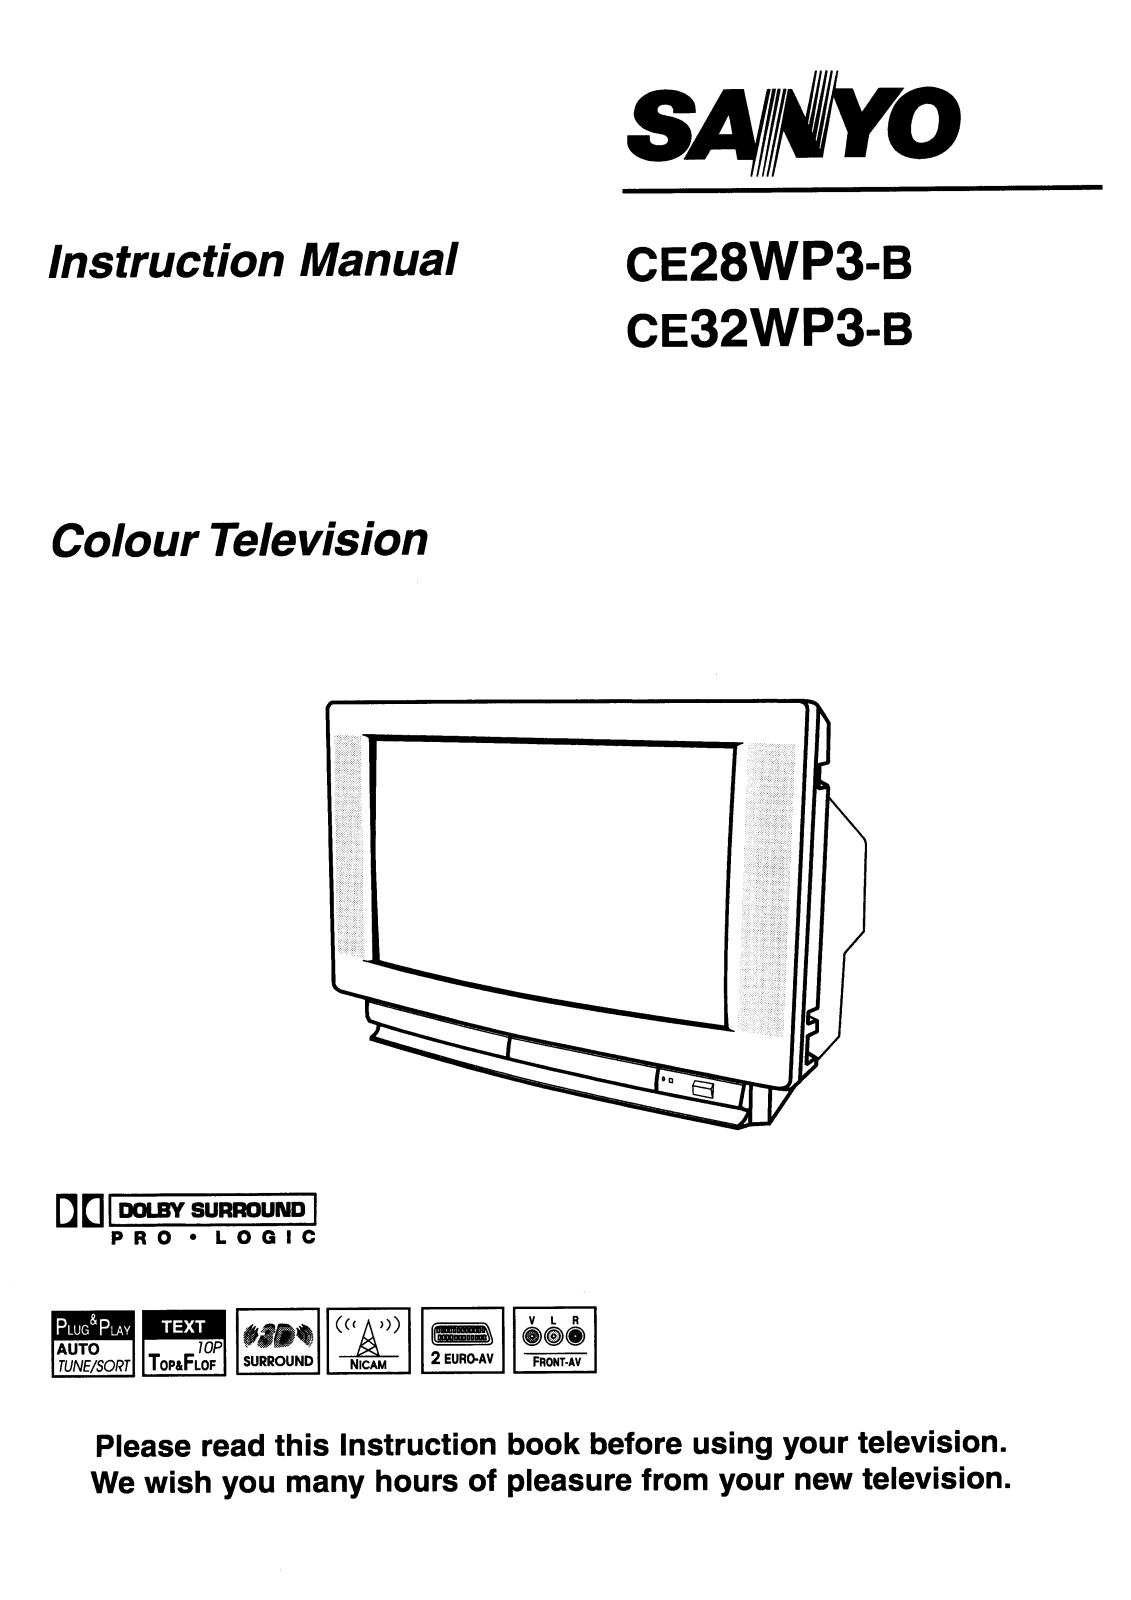 Sanyo CE32WP3-B, CE28WP3-B Instruction Manual